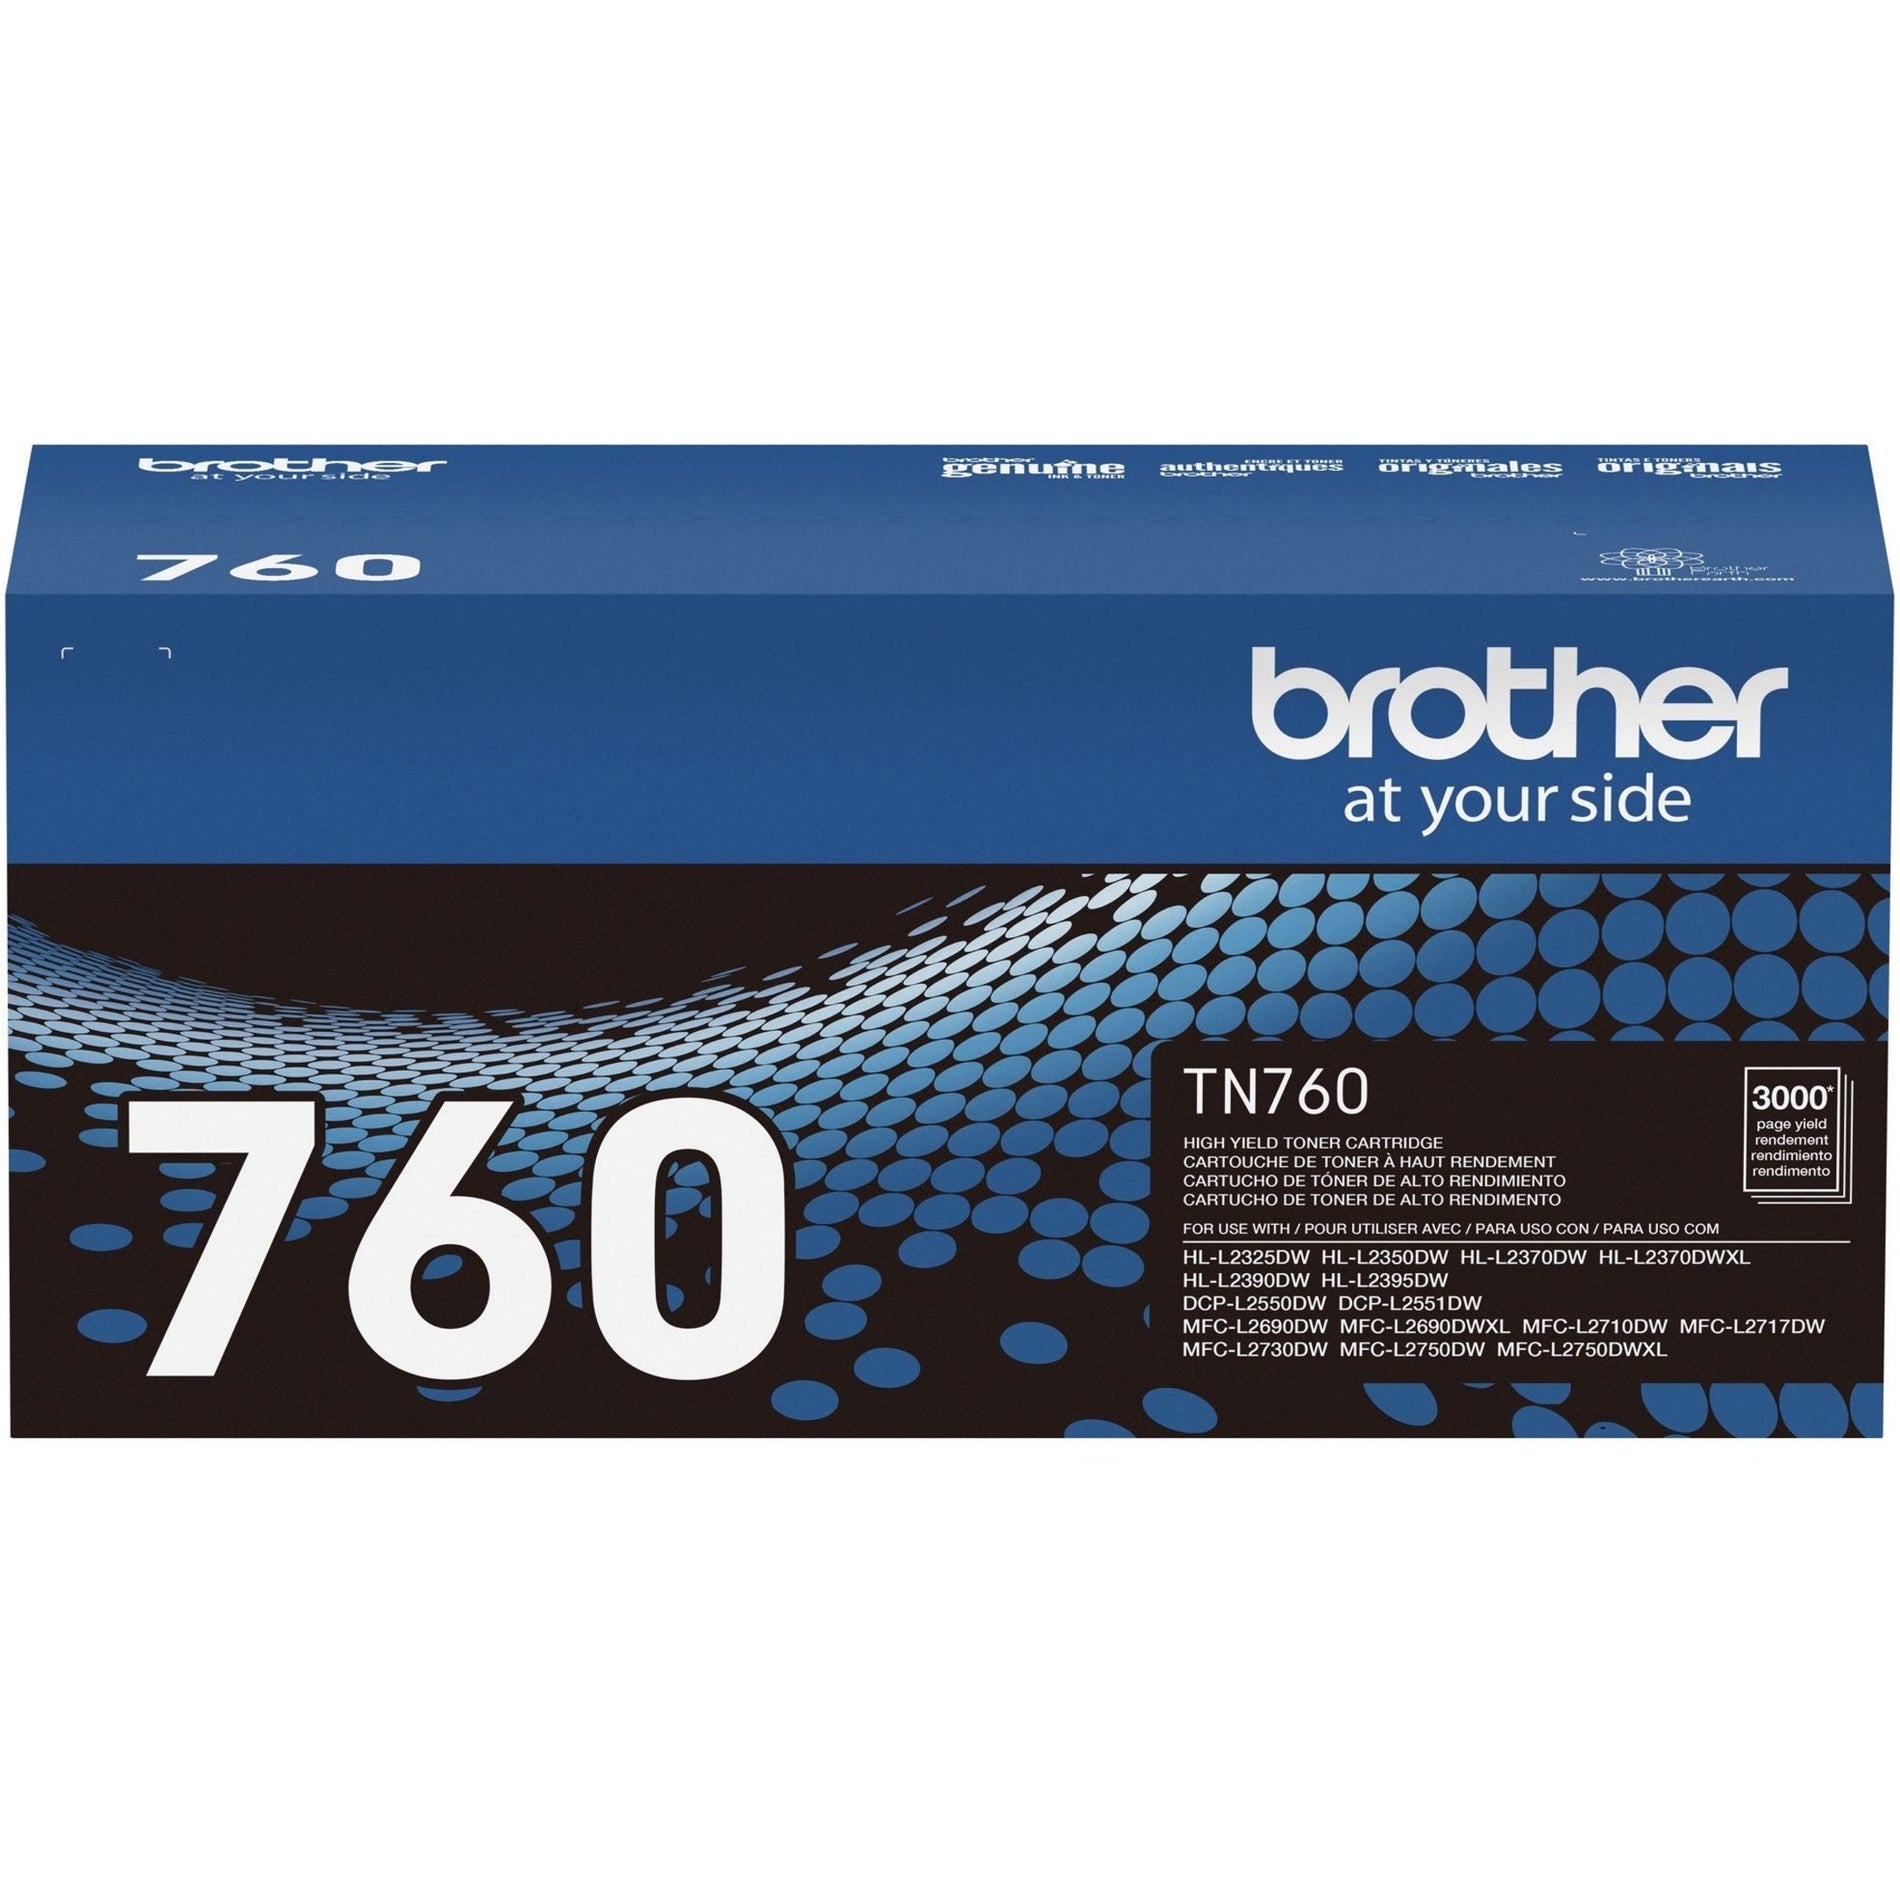 Brother TN-760 Echte Hoogrendement Toner Cartridge - Zwart Compatibel met HL-L2350DW HL-L2390DW HL-L2395DW HL-L2370DW DCP-L2550DW MFC-L2710DW MFC-L2750DW HL-L2370DW XL MFC-L2750DW XL